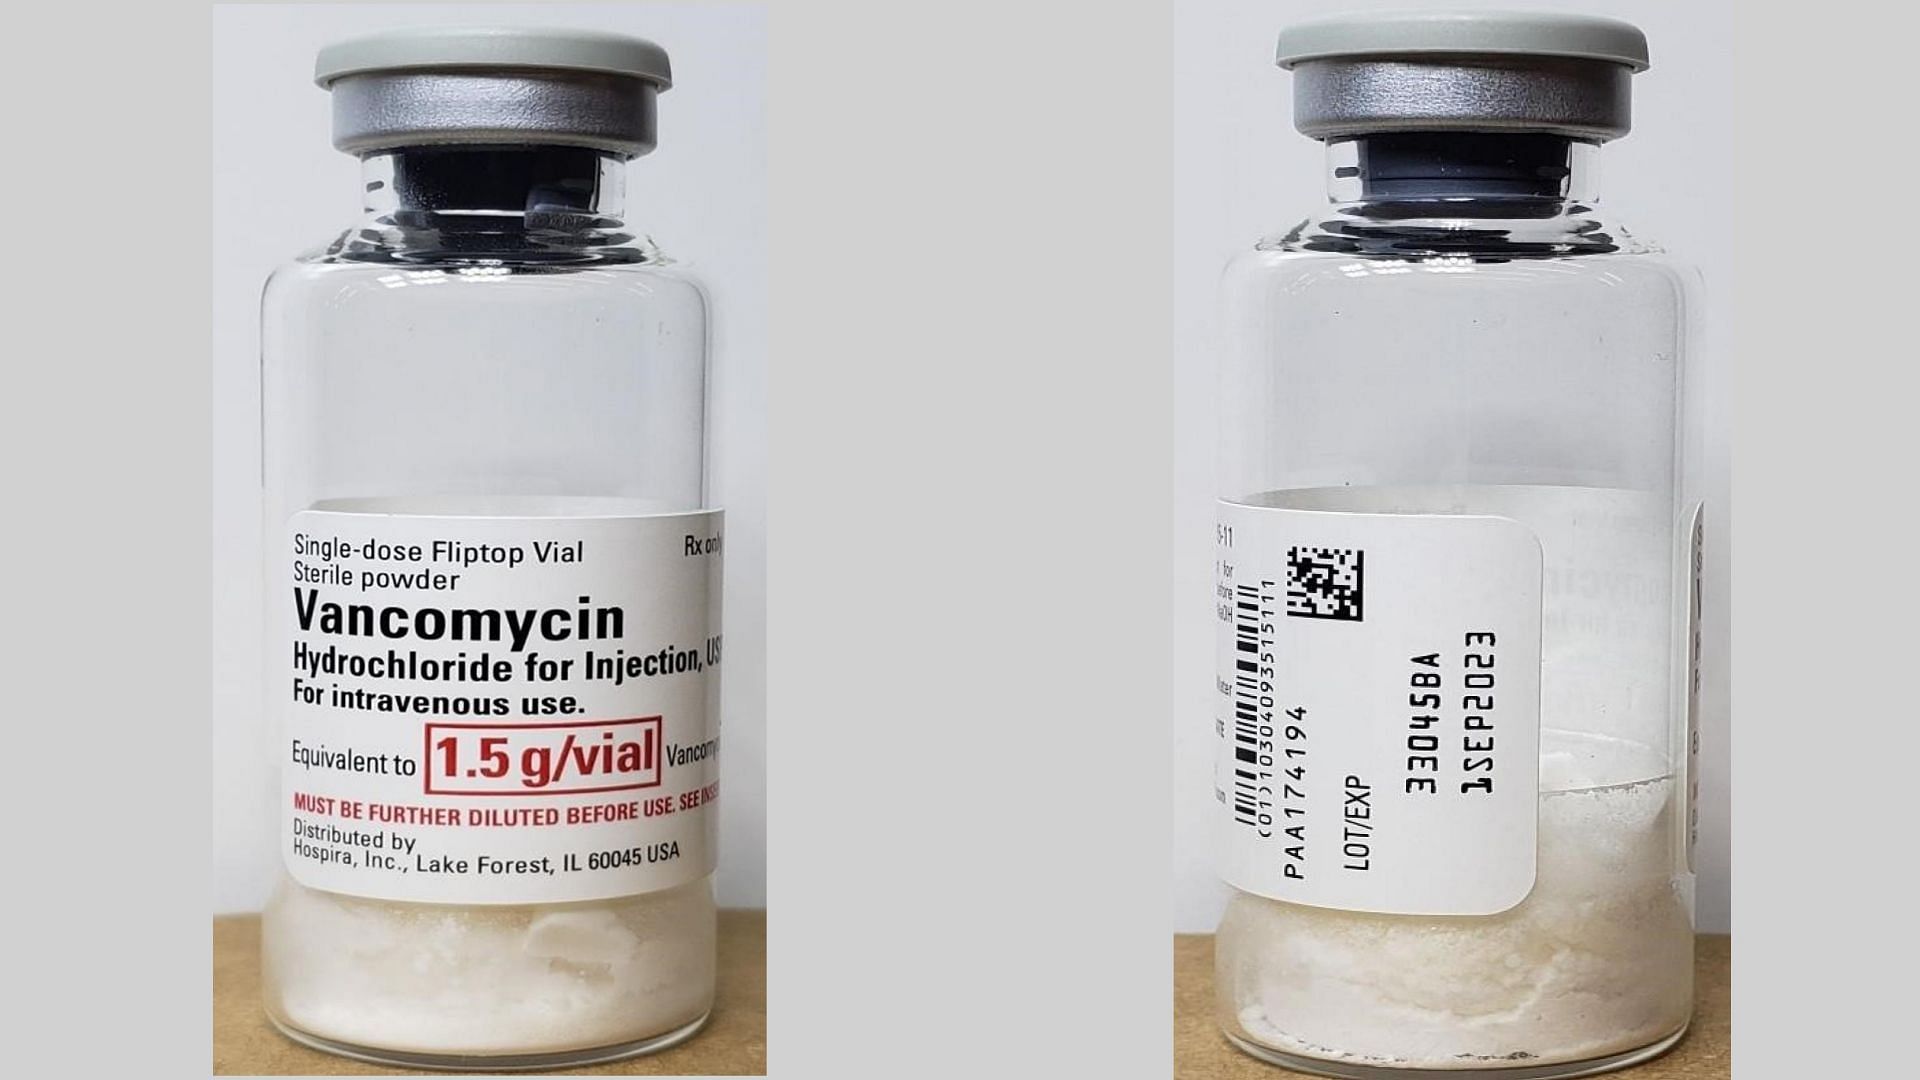 recalled vial of Vancomycin Hydrochloride Injection (Image via FDA)